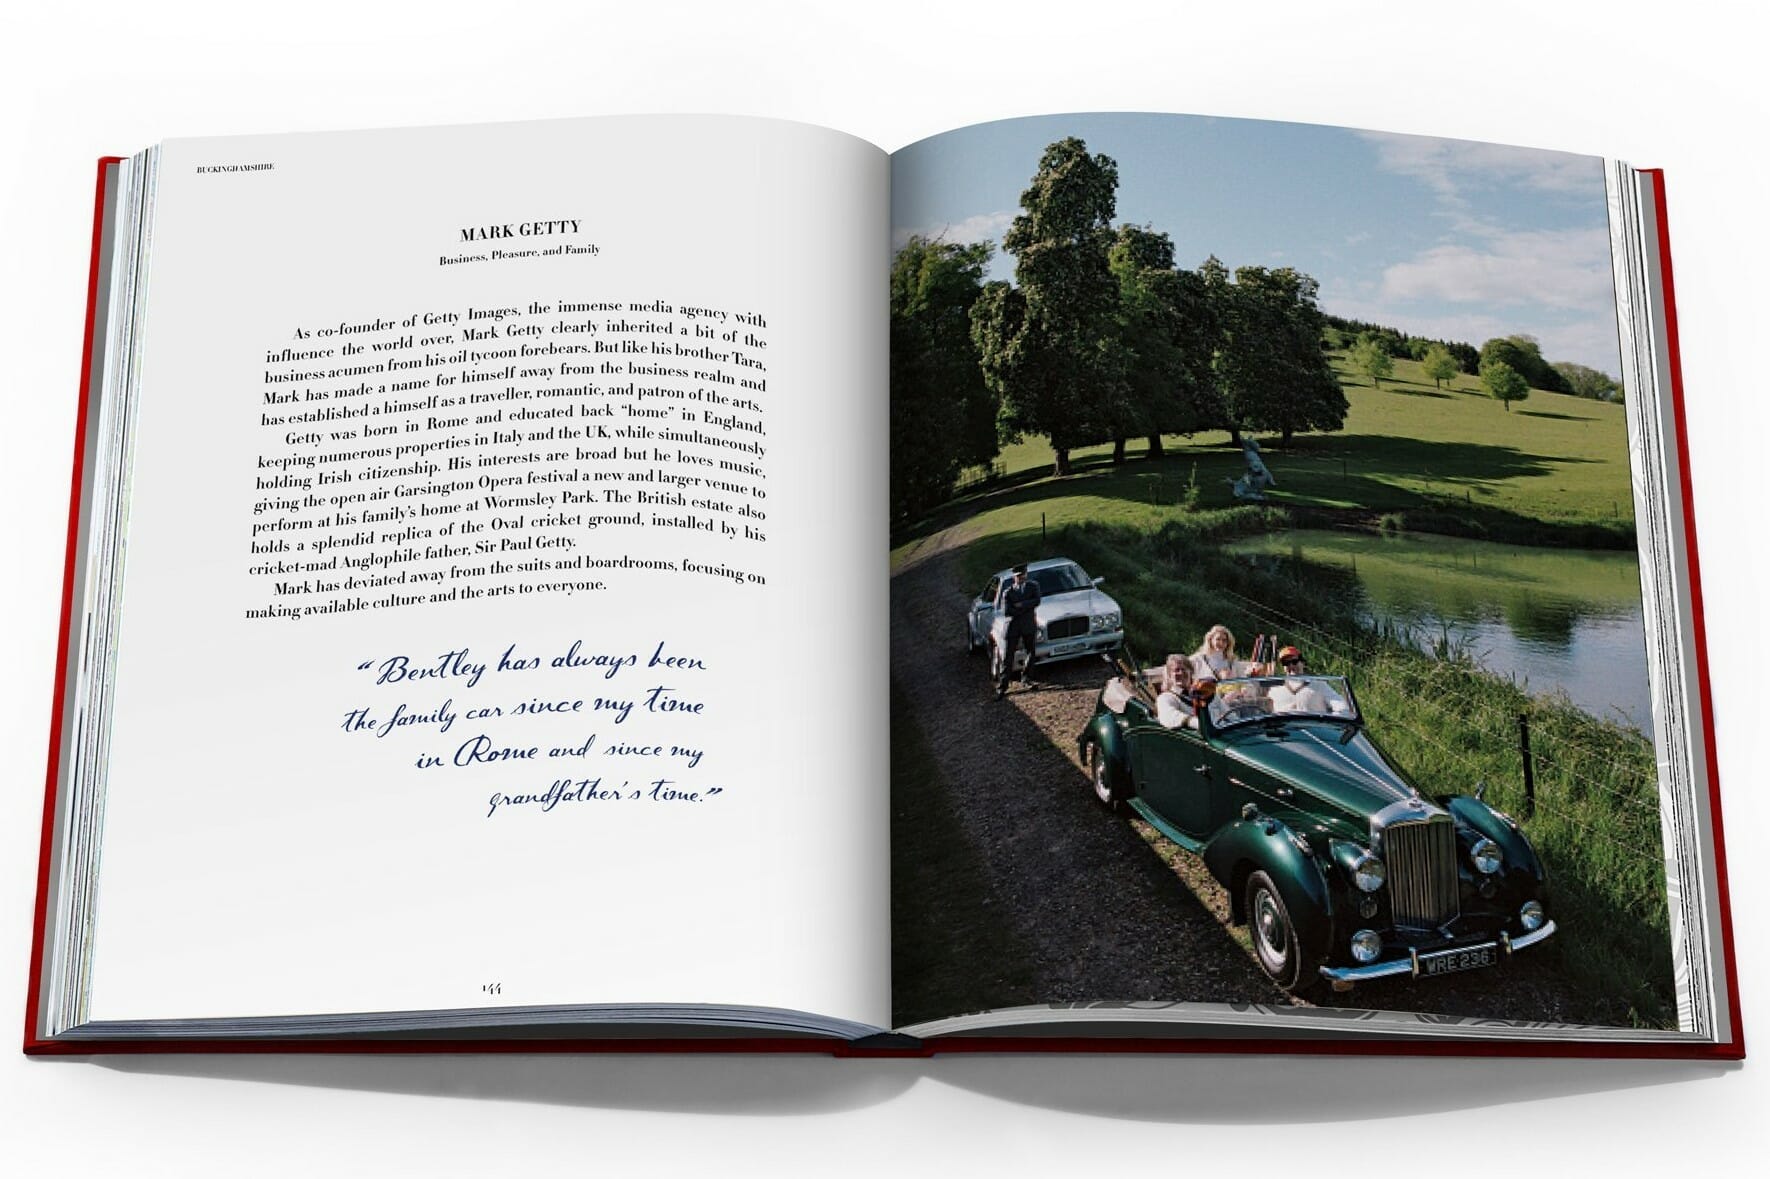 Taschen coffee table book on Bentley automobiles